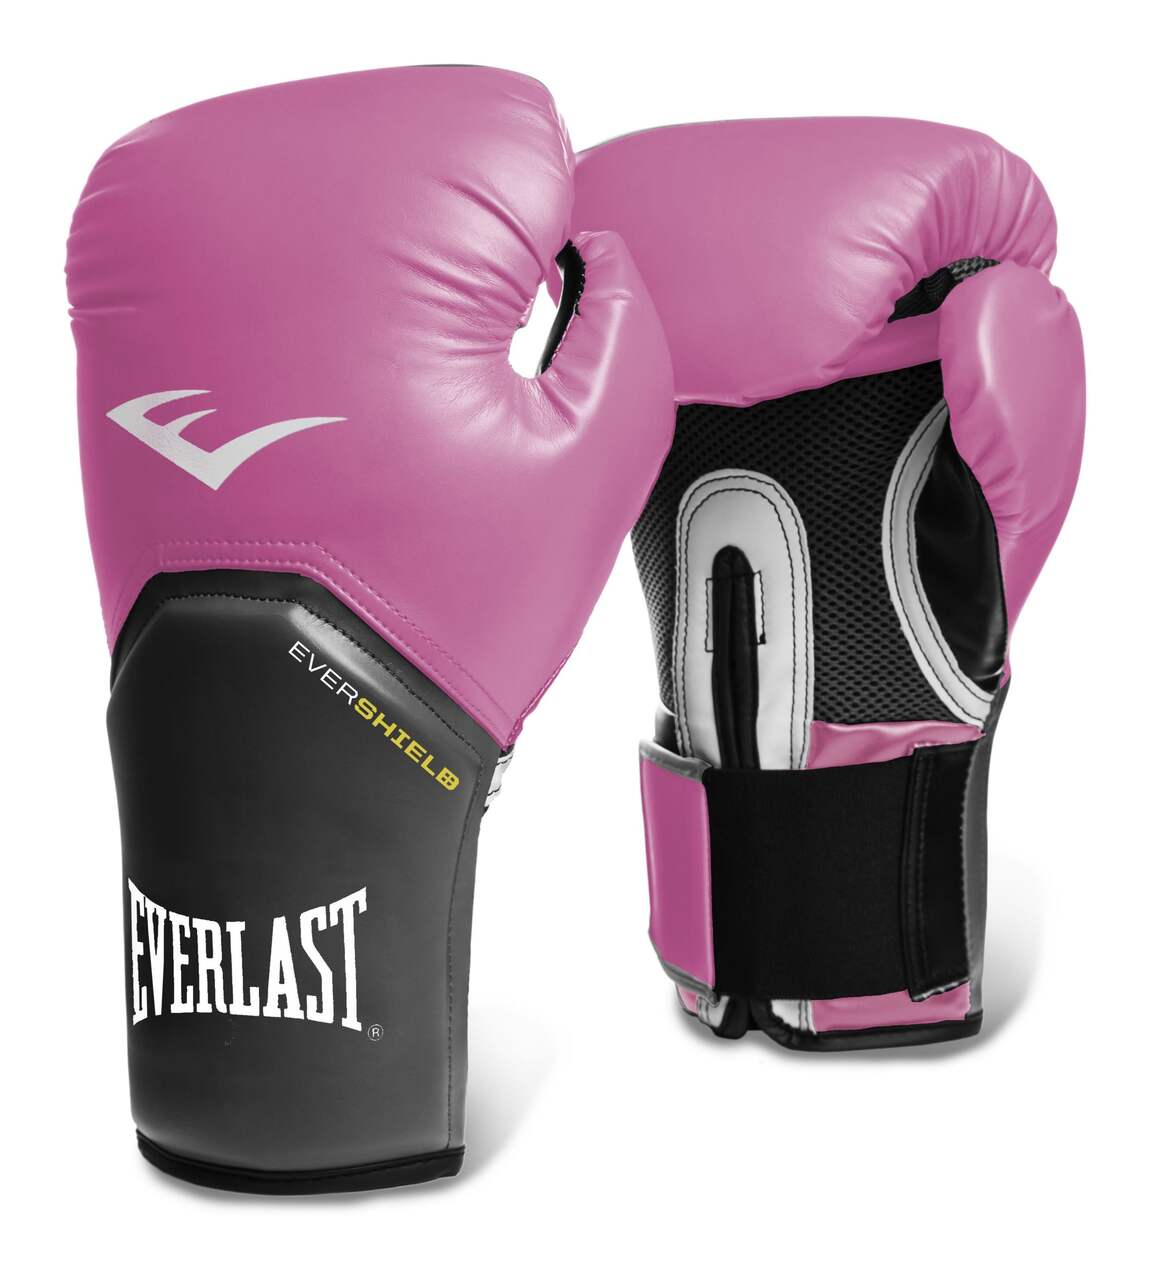 Everlast Pro Style Elite Training Gloves, Black/Pink, 12-oz